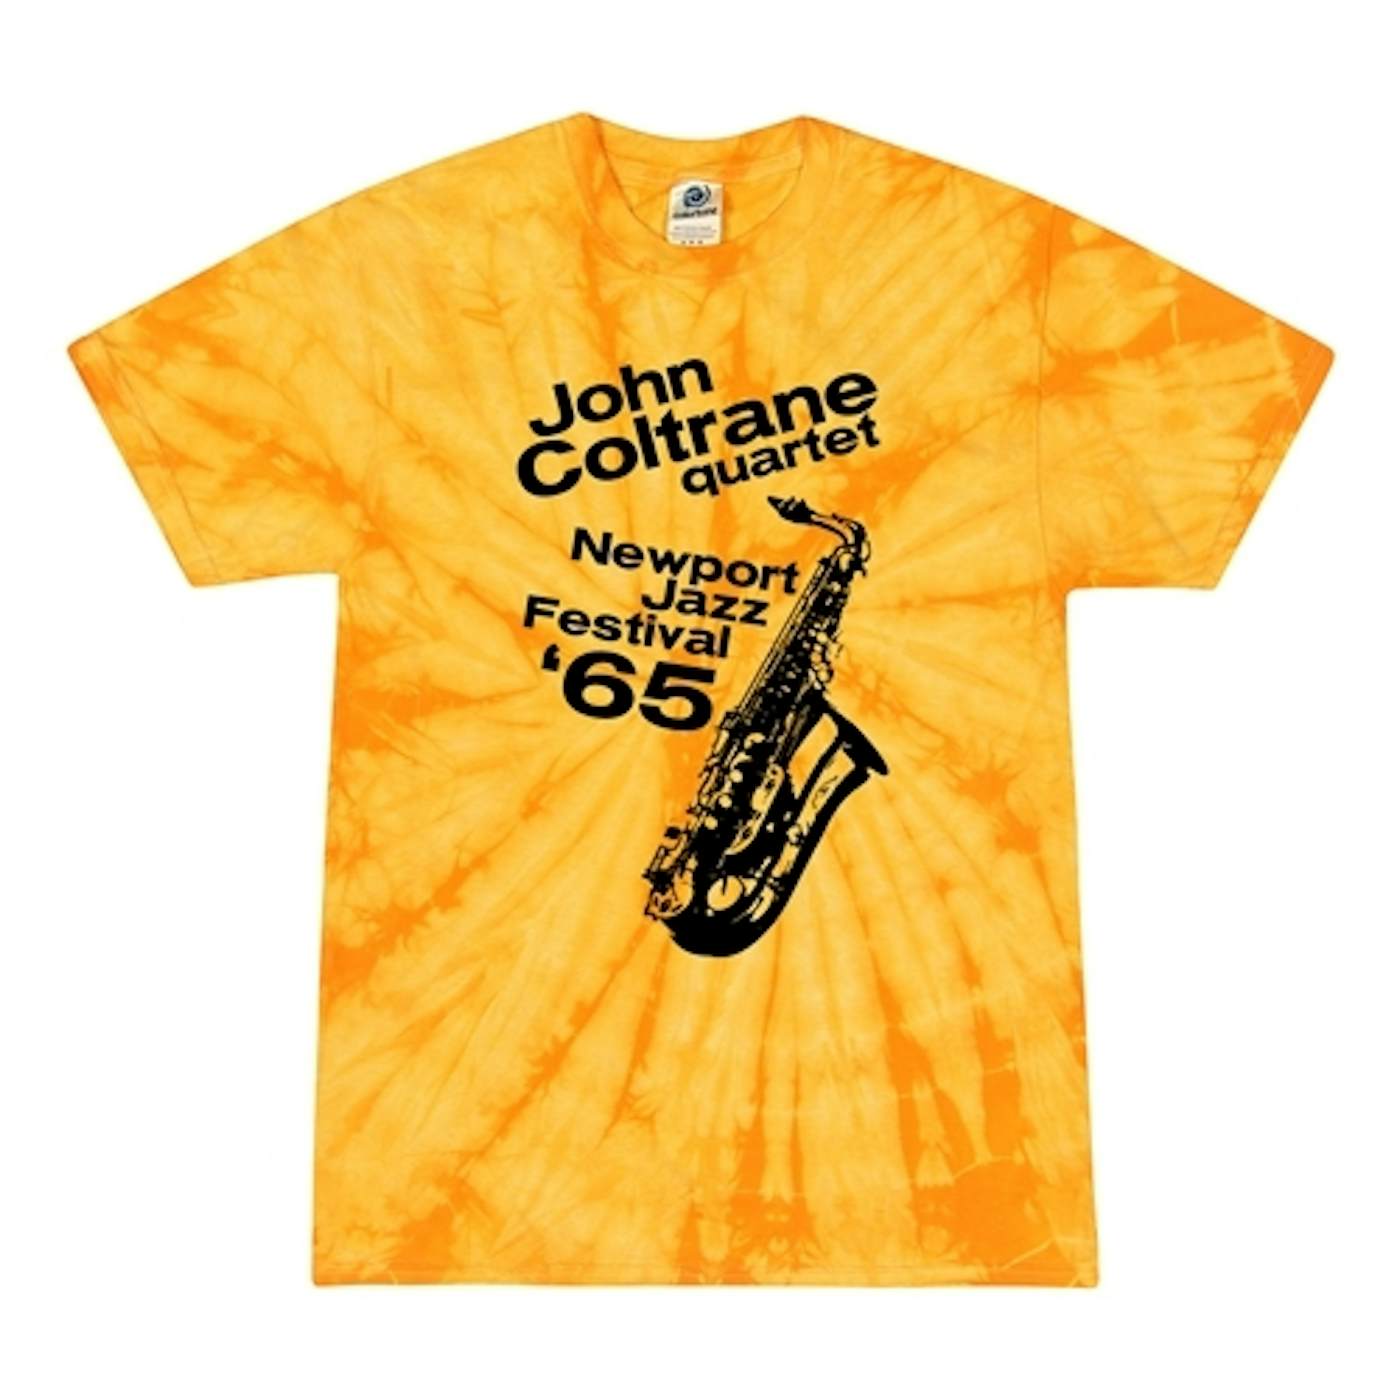 John Coltrane At Newport Jazz Festival Tie-Dye T-Shirt